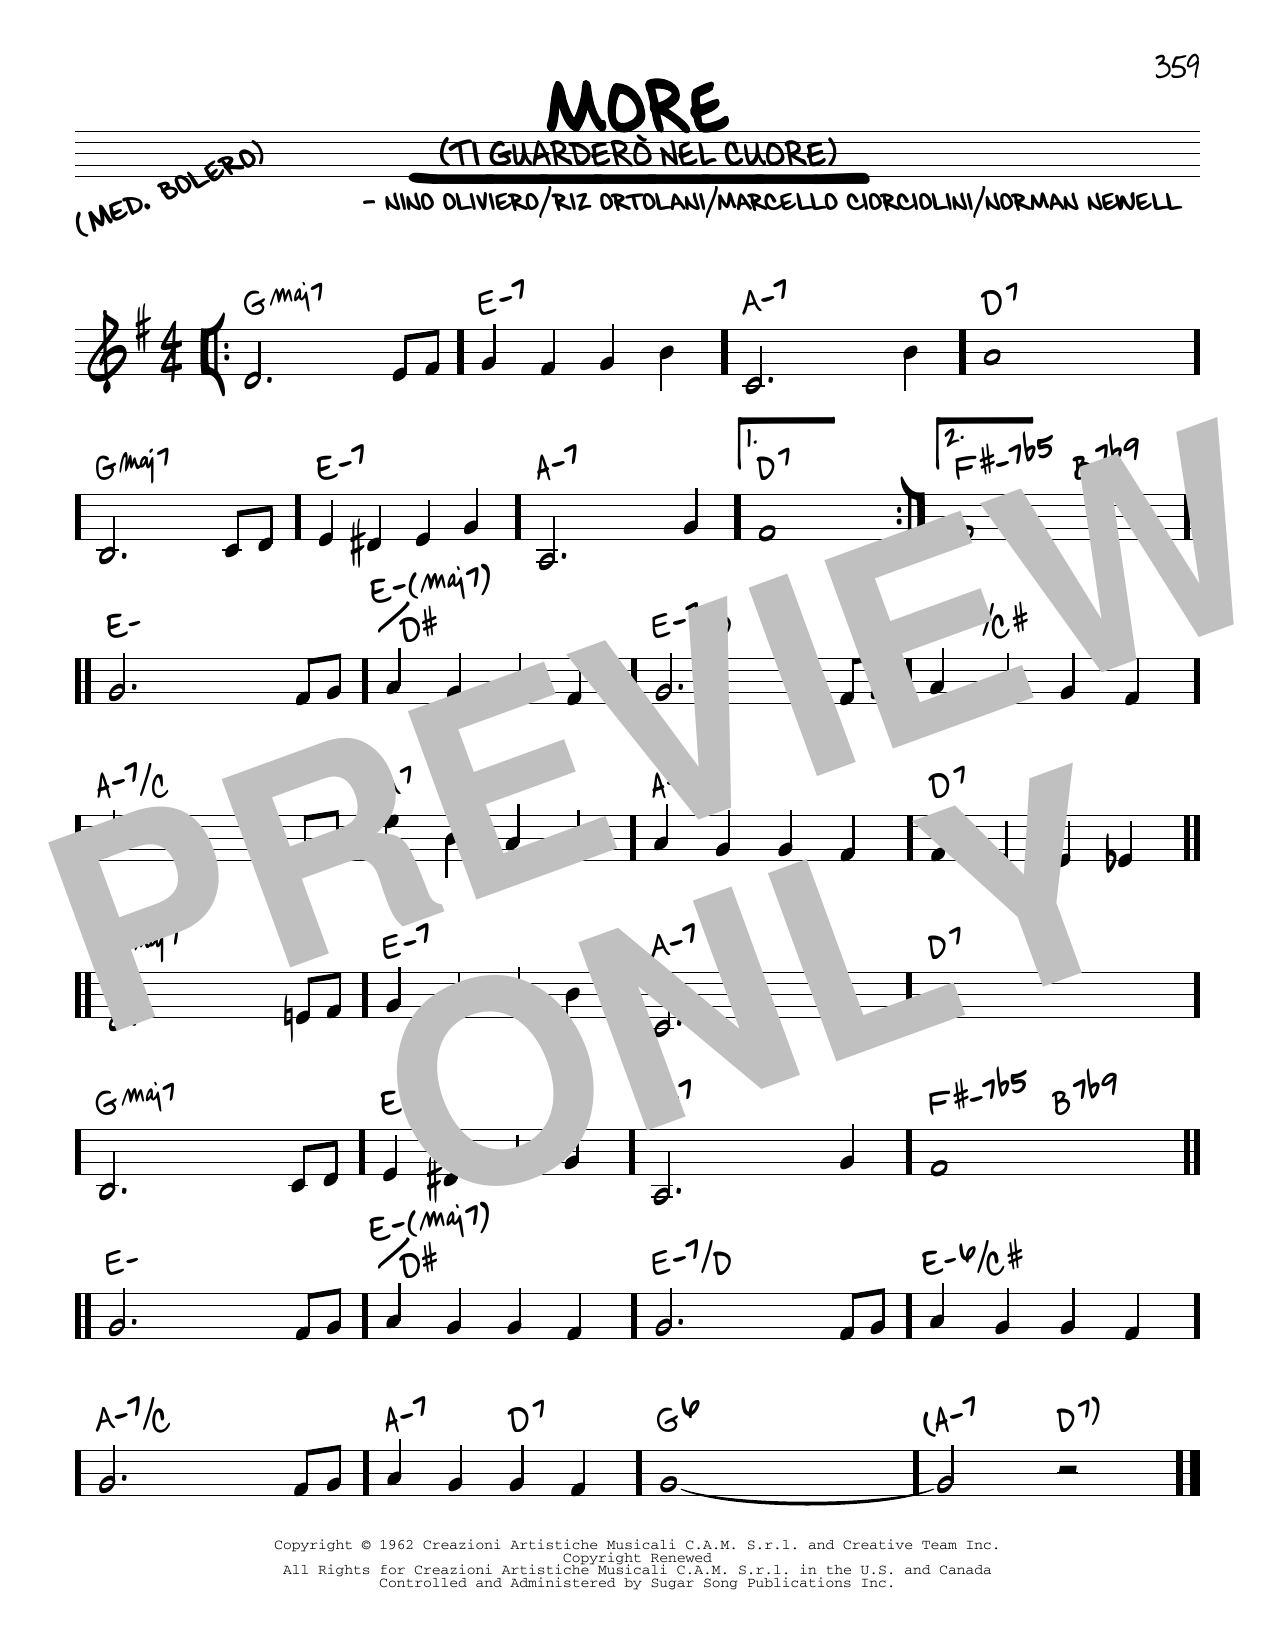 Marcello Ciorciolini More (Ti Guarderò Nel Cuore) Sheet Music Notes & Chords for Easy Ukulele Tab - Download or Print PDF